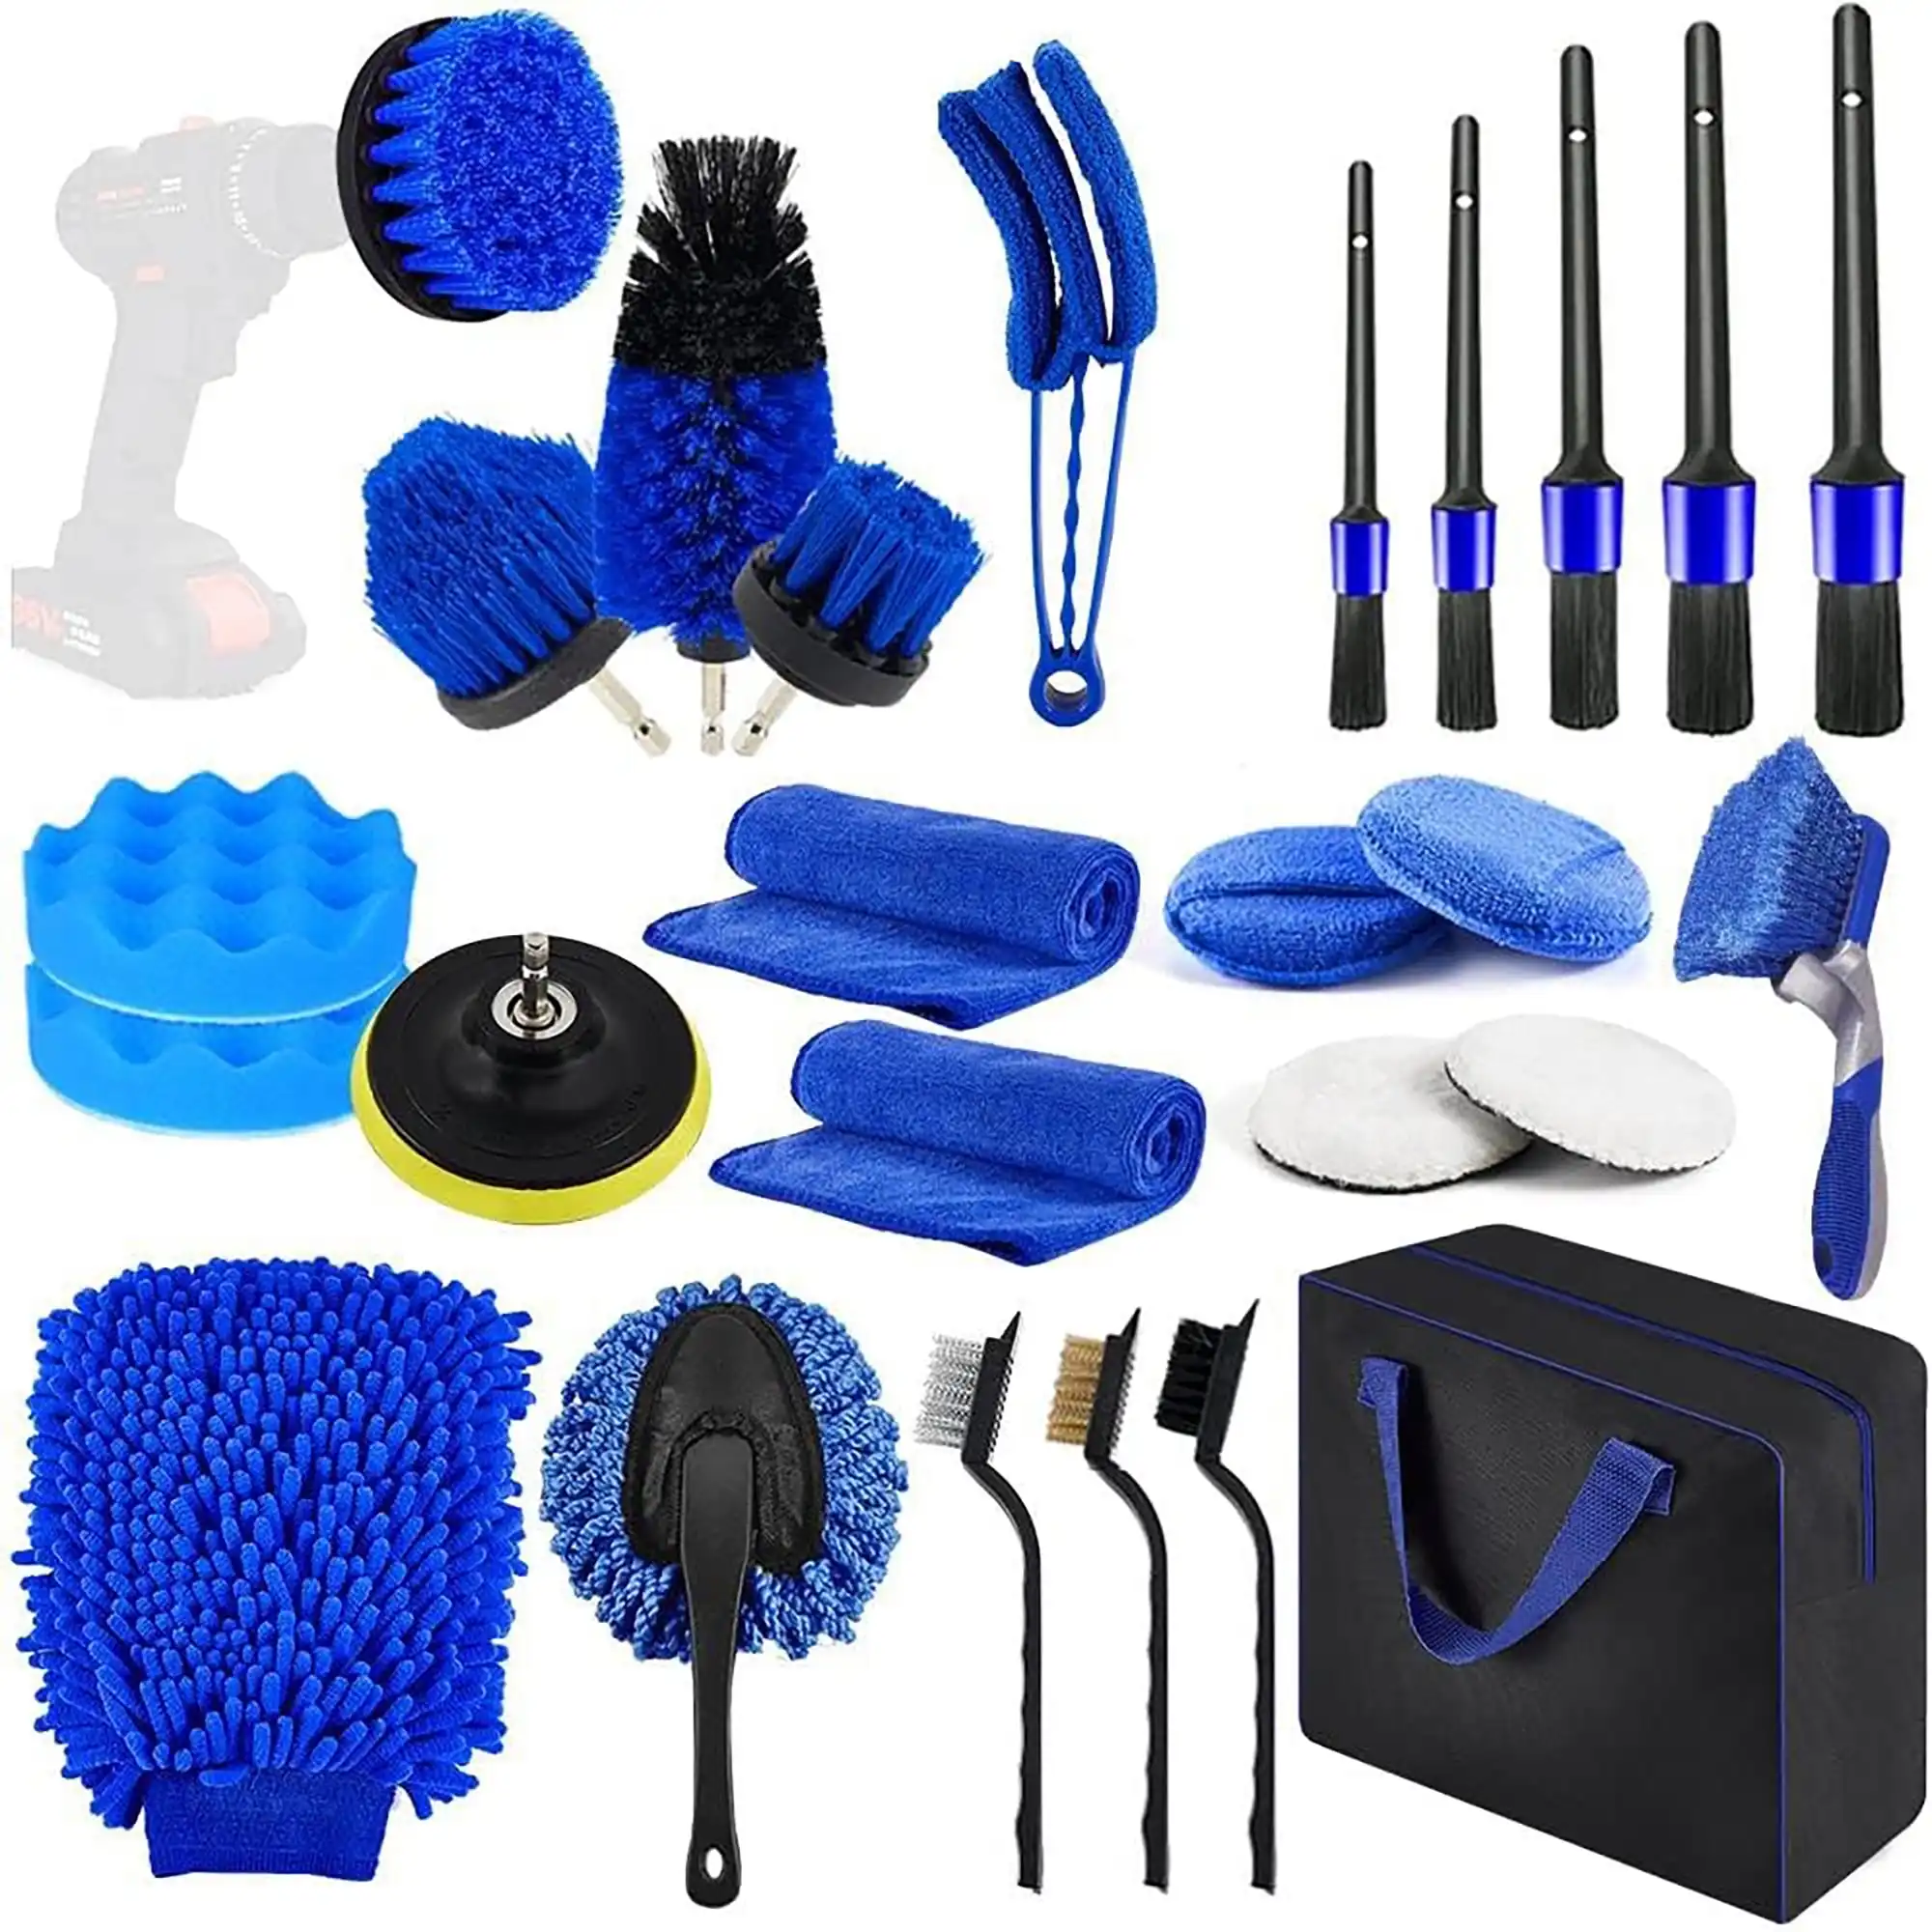 Kit de escovas para limpeza de carros, kit de bolsas de limpeza automática para limpeza de carros, kit com 27 unidades